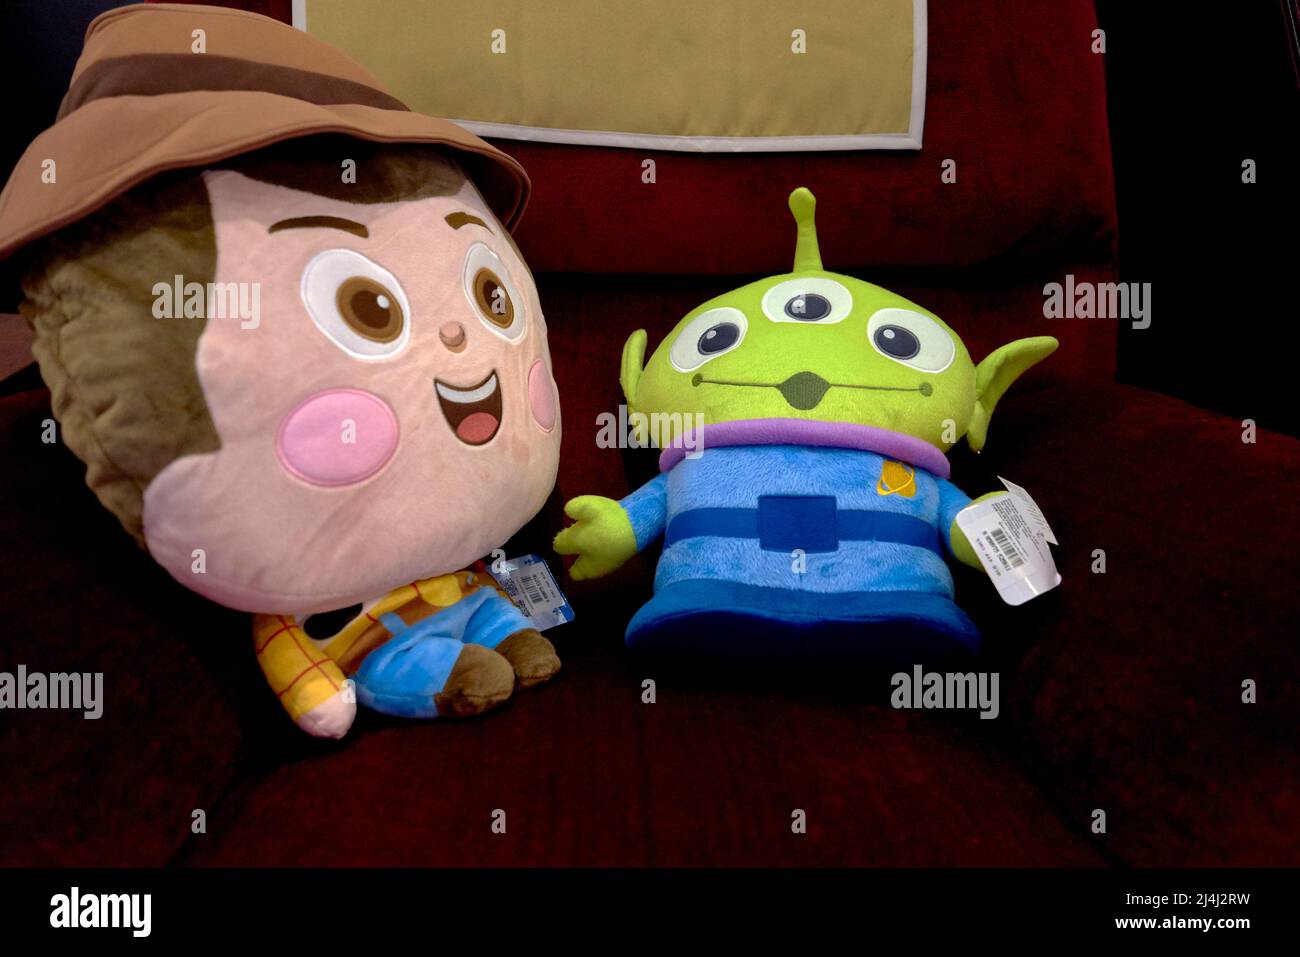 Venta de muñecas de personajes de Toy Story Foto de stock